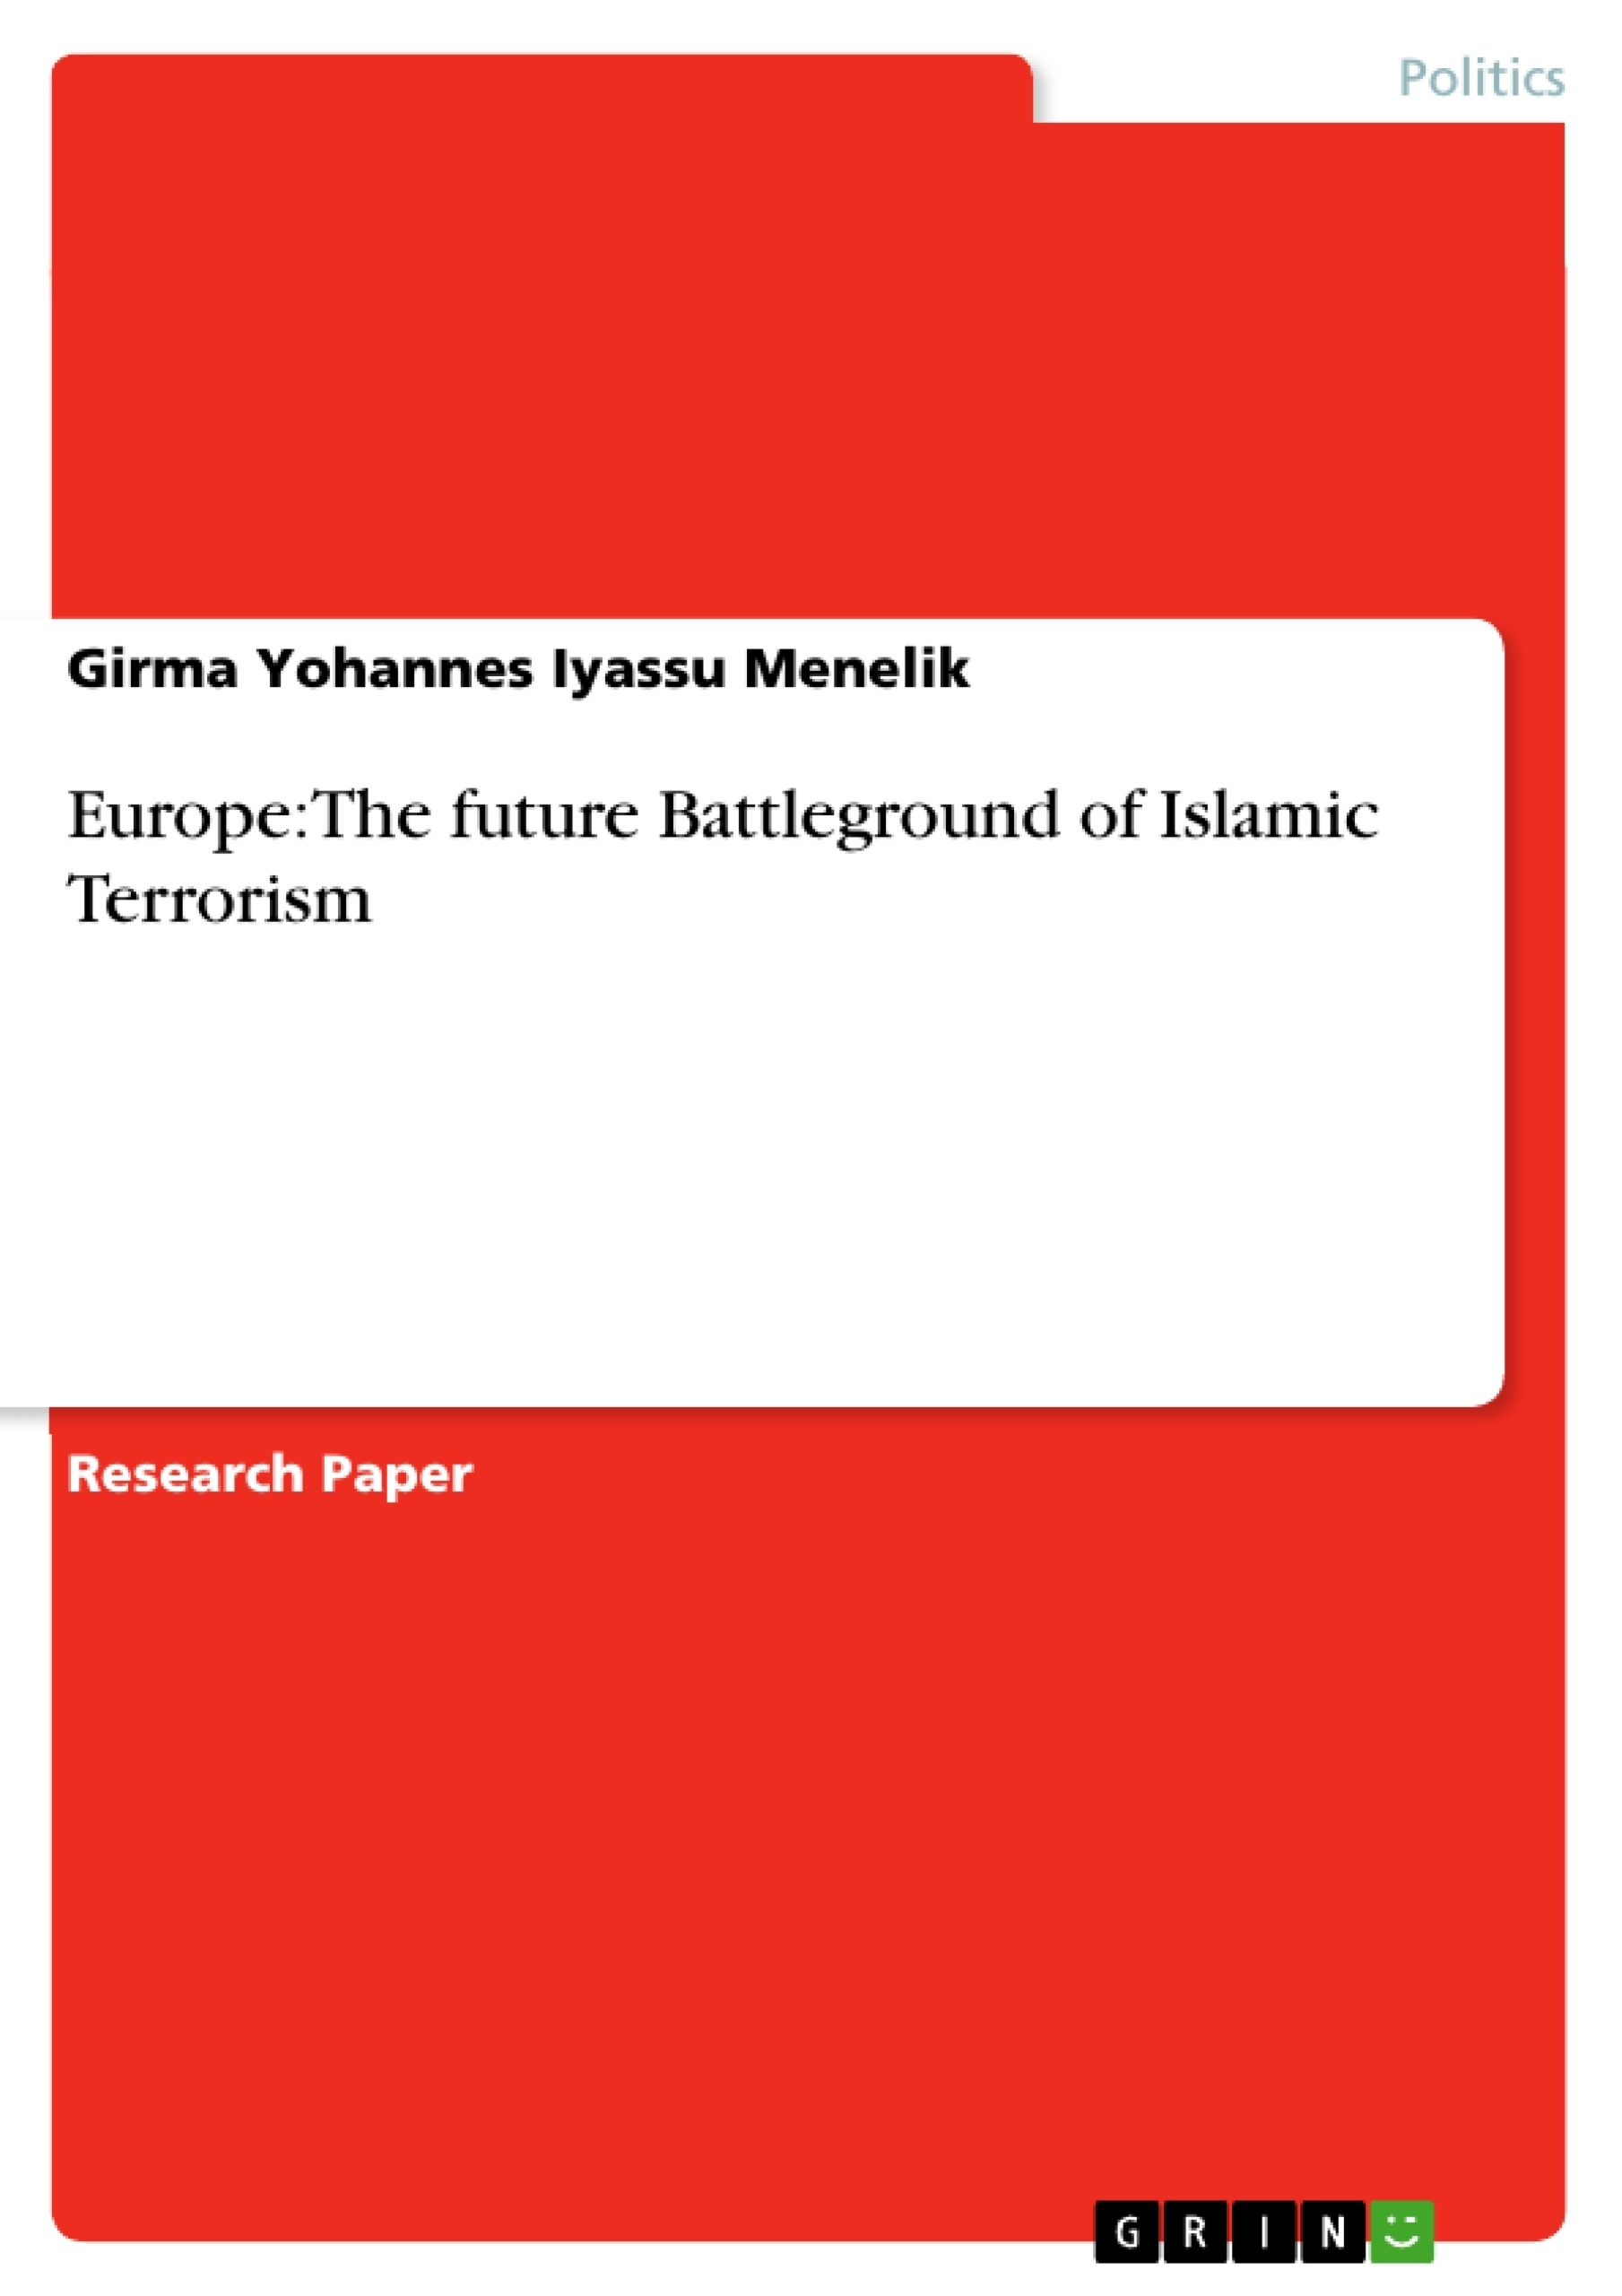 Title: Europe: The future Battleground of Islamic Terrorism